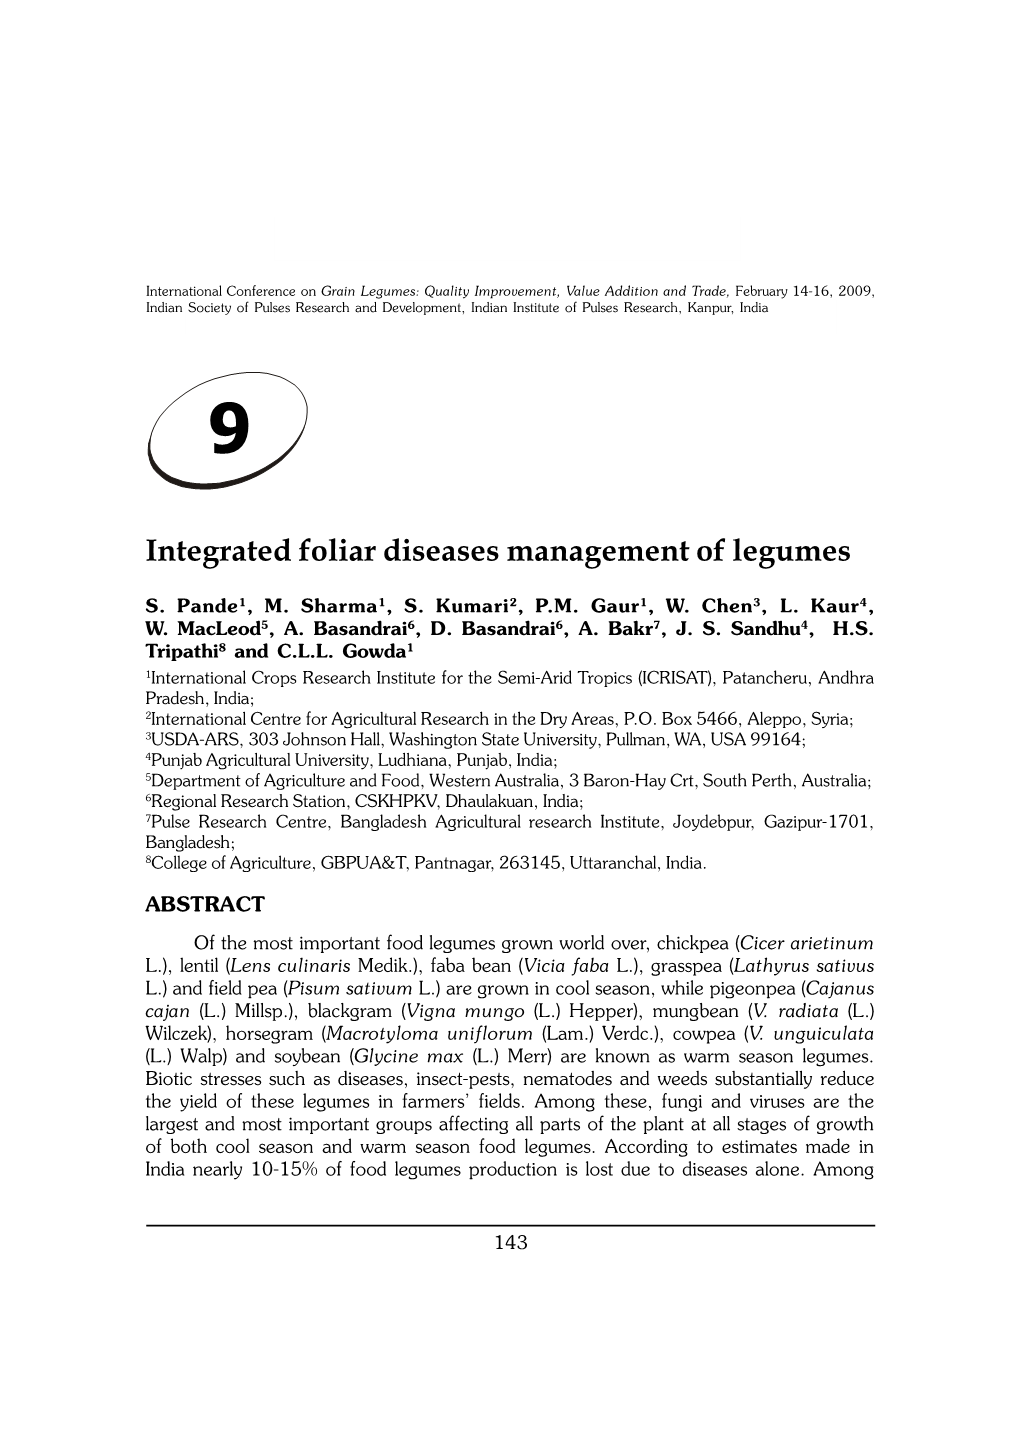 Integrated Foliar Diseases Management of Legumes